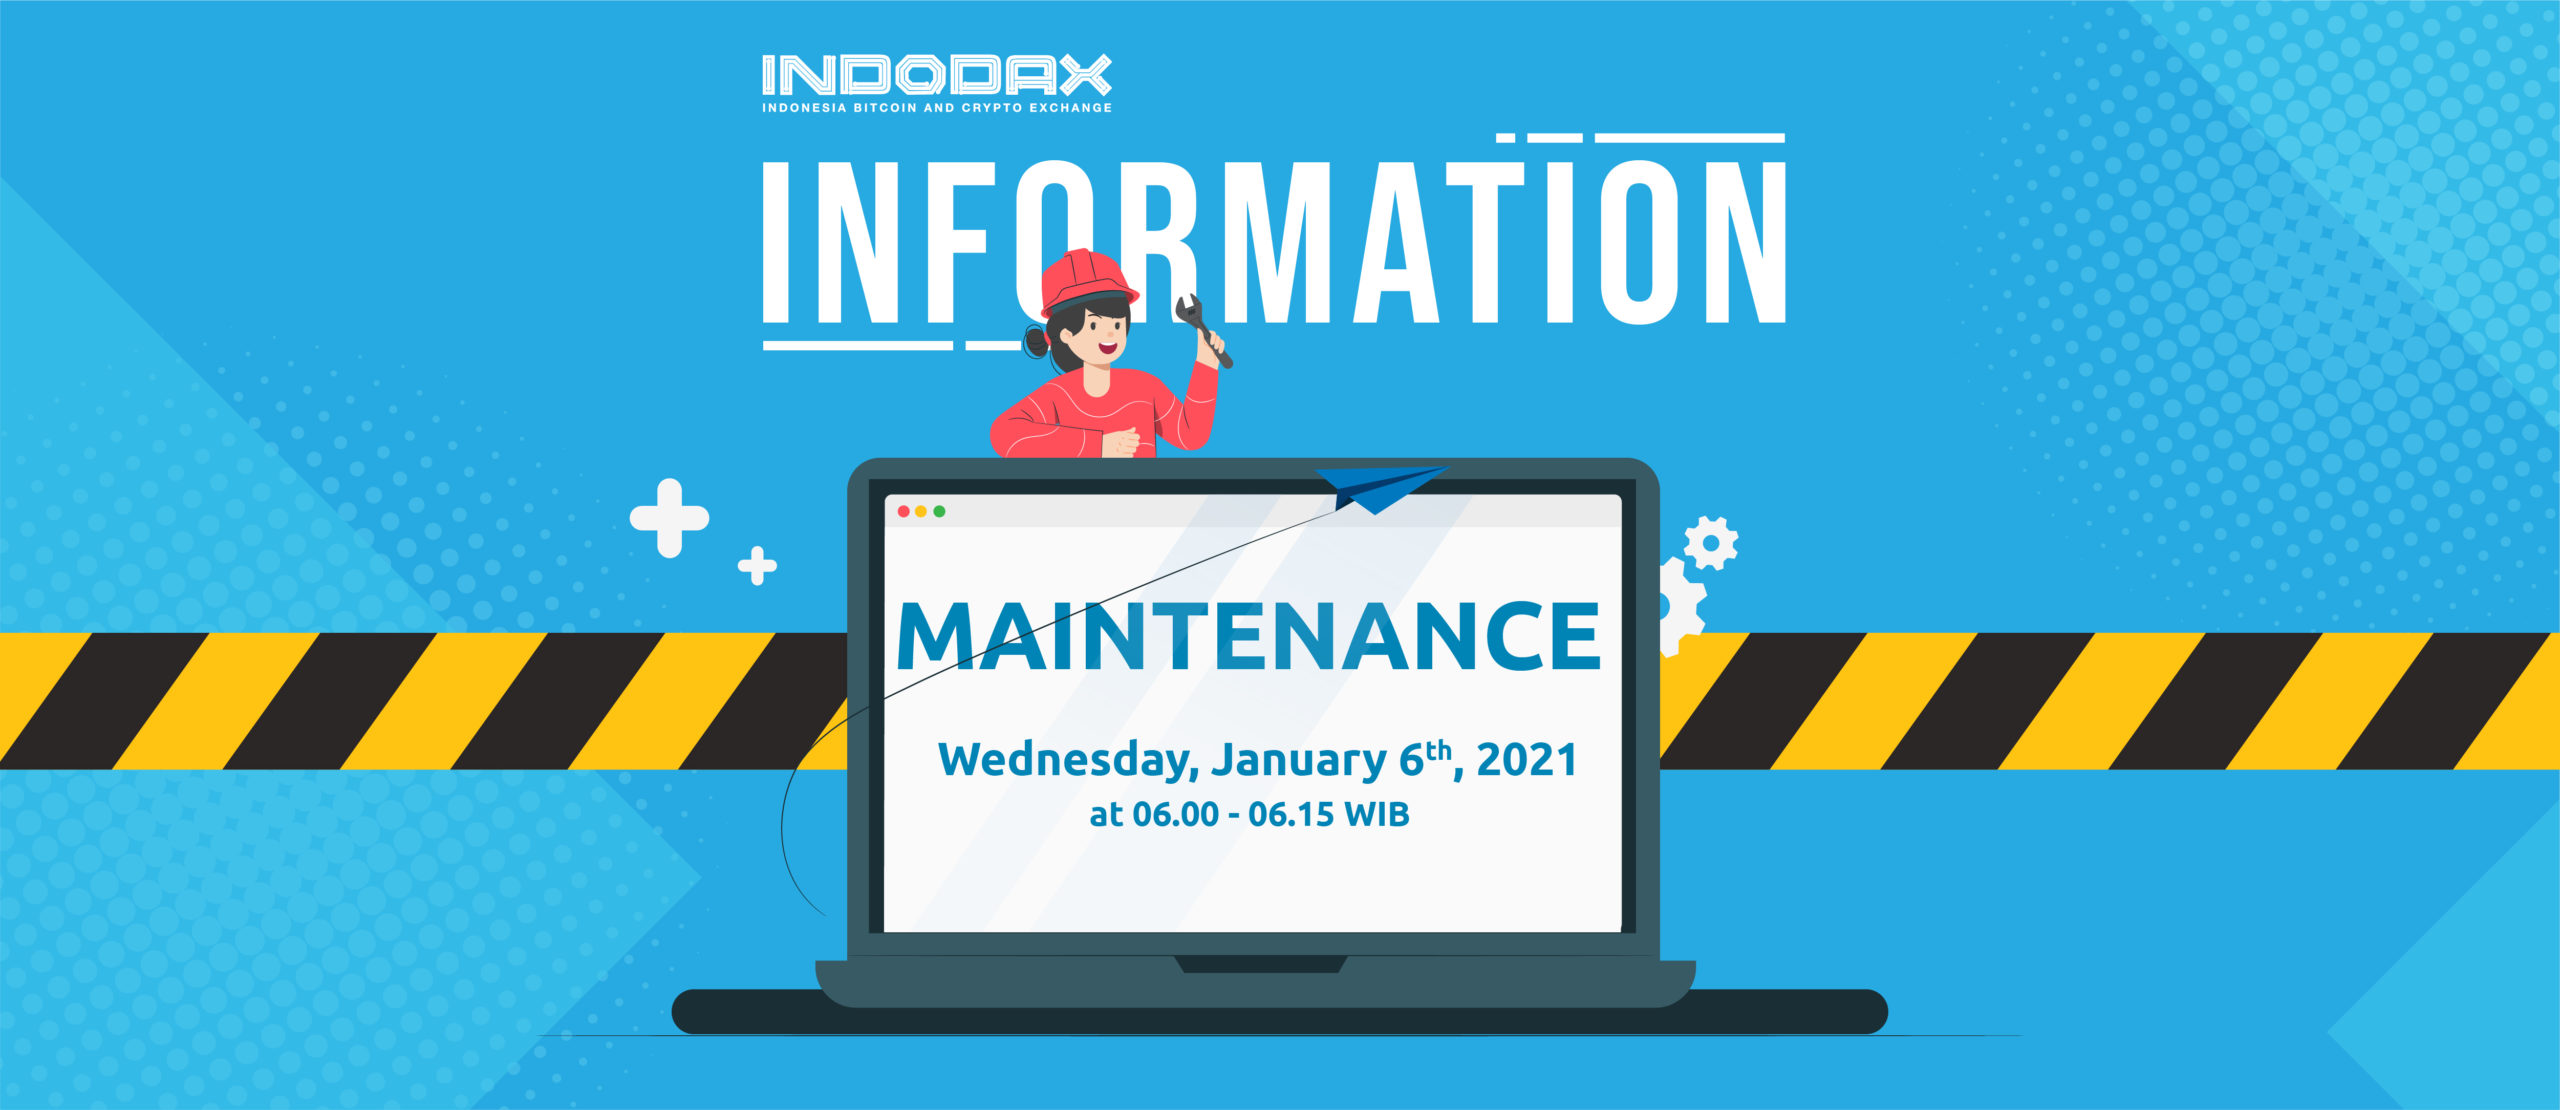 Indodax Maintenance Information